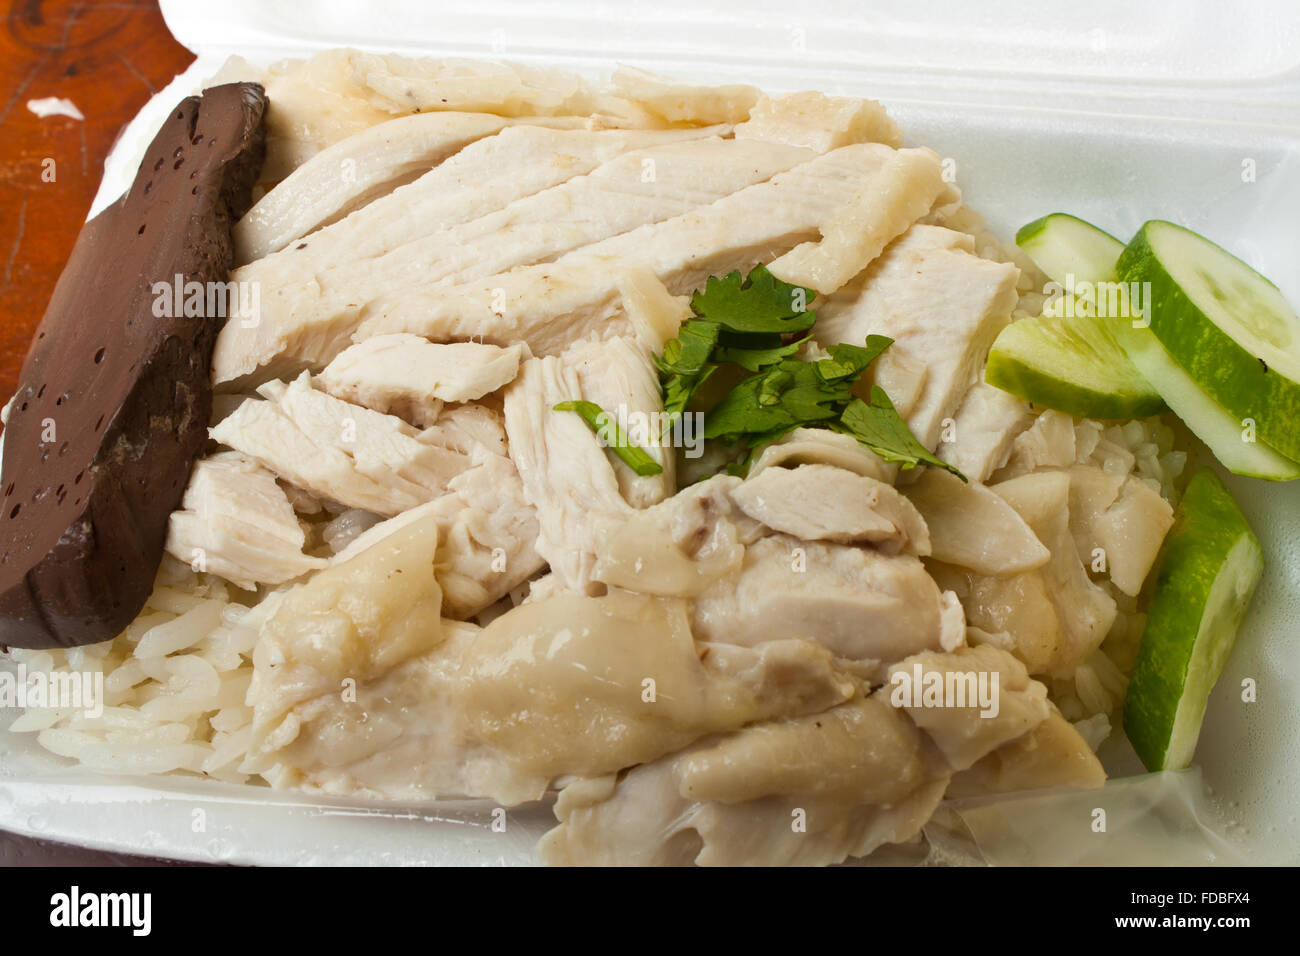 Hainanese Chicken Rice in the Styrofoam Box Stock Photo